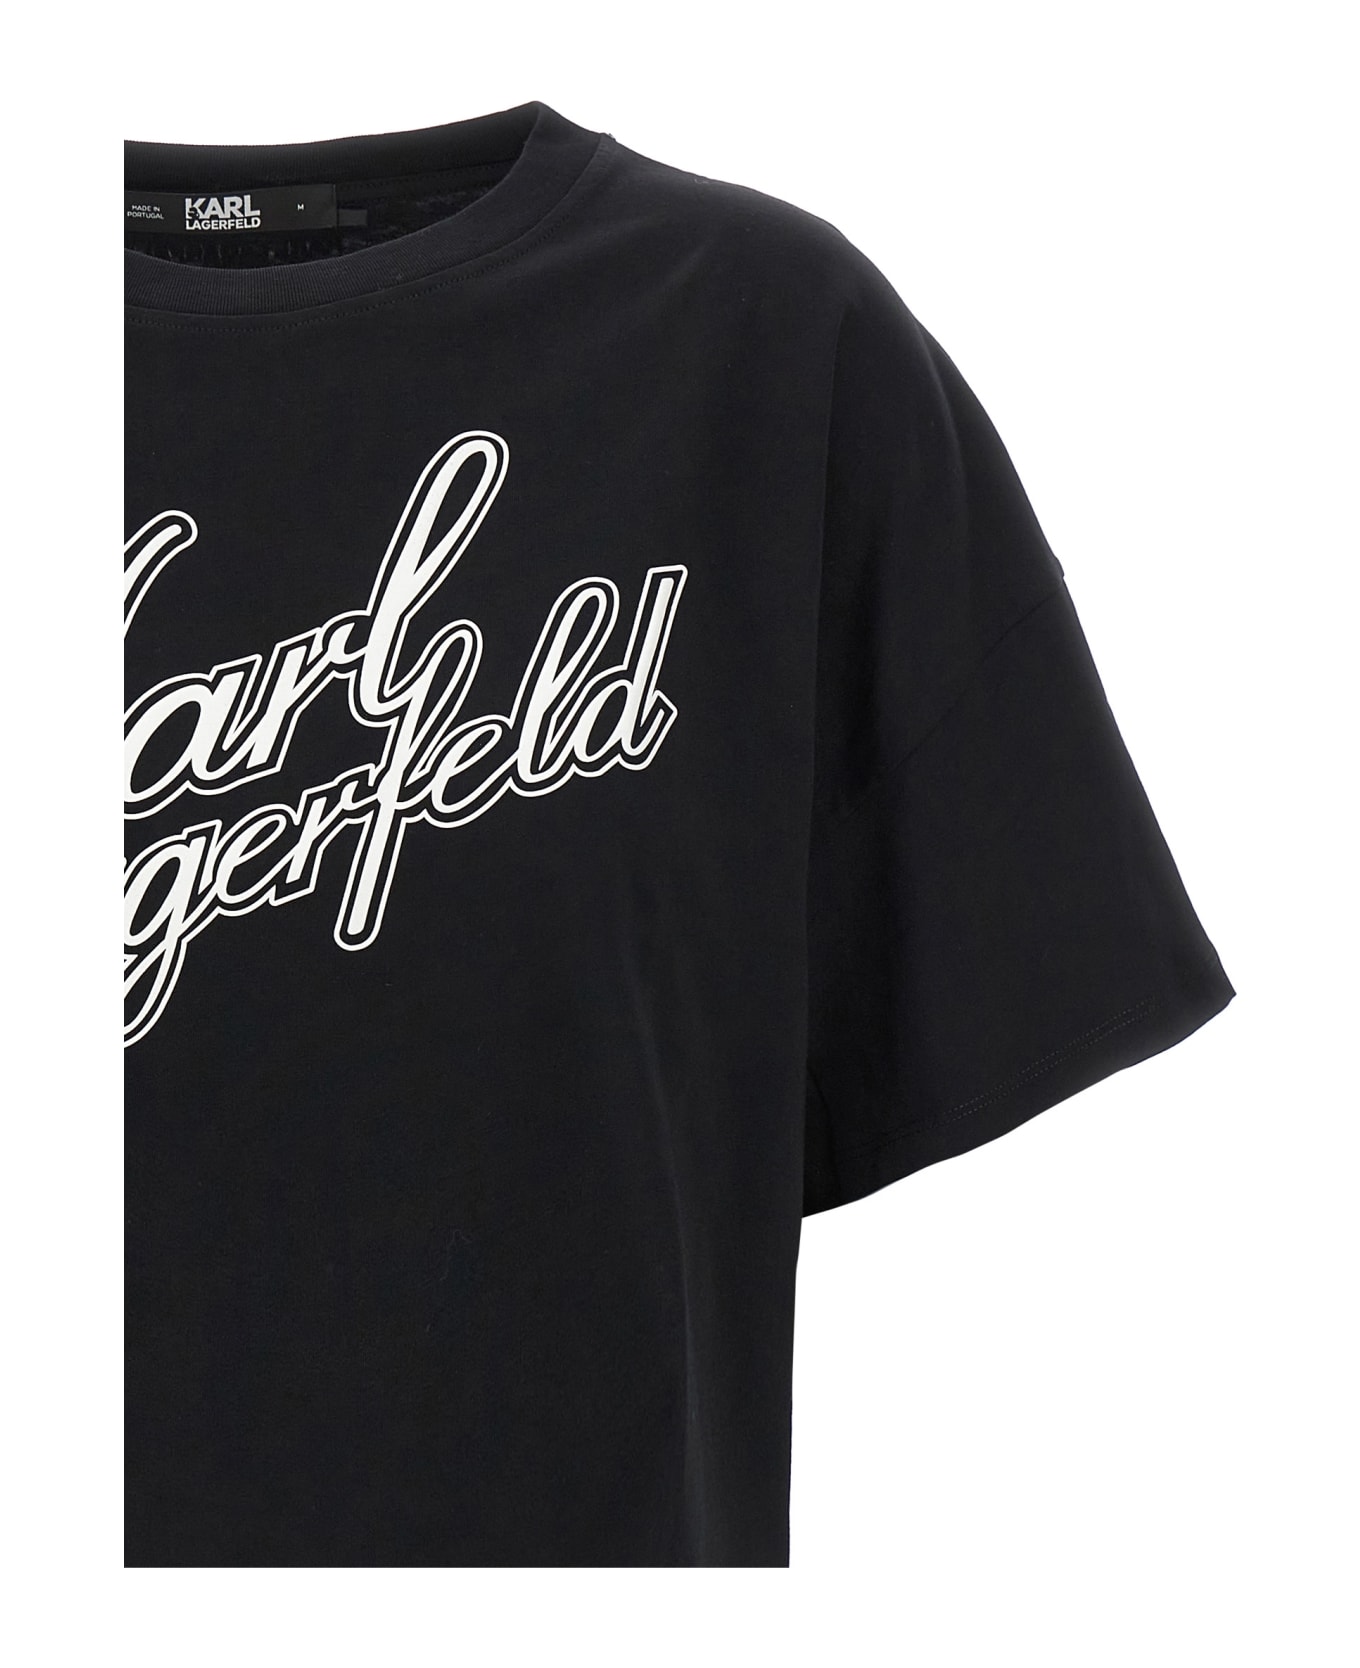 Karl Lagerfeld 'athleisure Cropped' T-shirt - White/Black